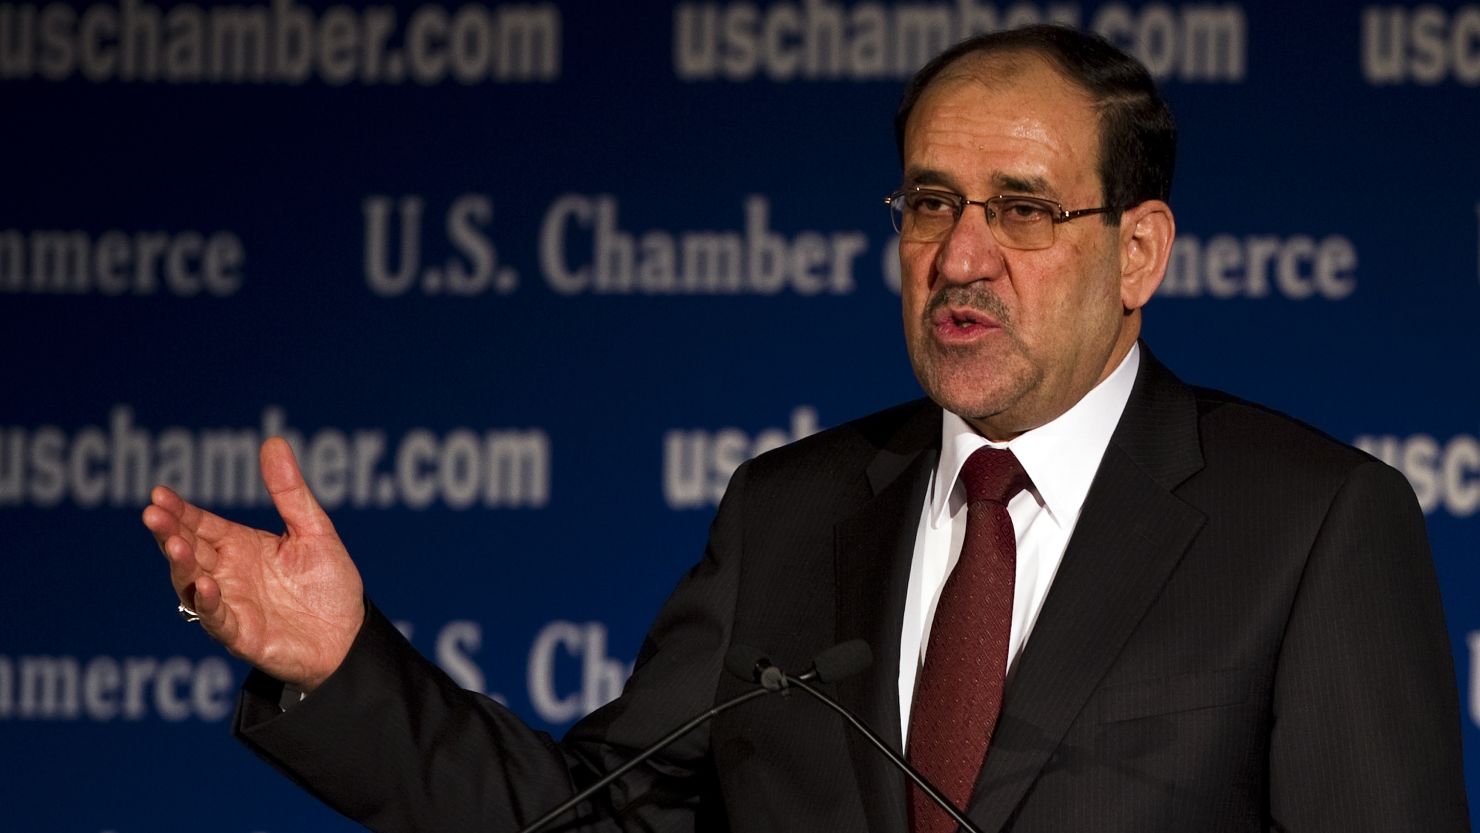 Iraqi Prime Minister Nuri al-Maliki has tenuous support among the Sunni population.